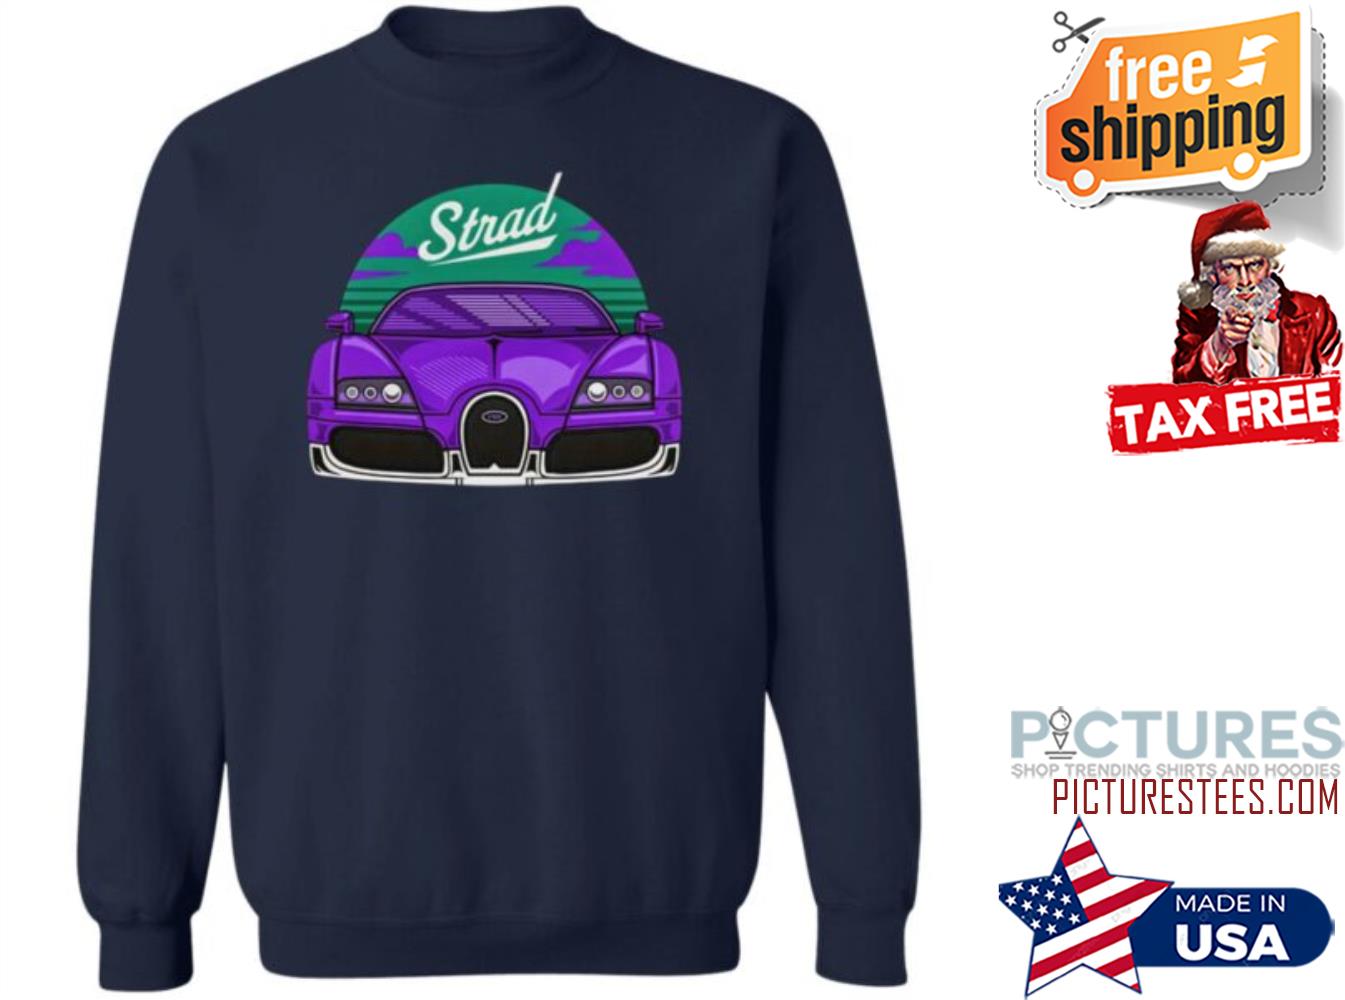 v-neck FREE Tee and hoodie, shirt, Unisex shipping Bugatti Stradman tank Strad tee, sweater, top